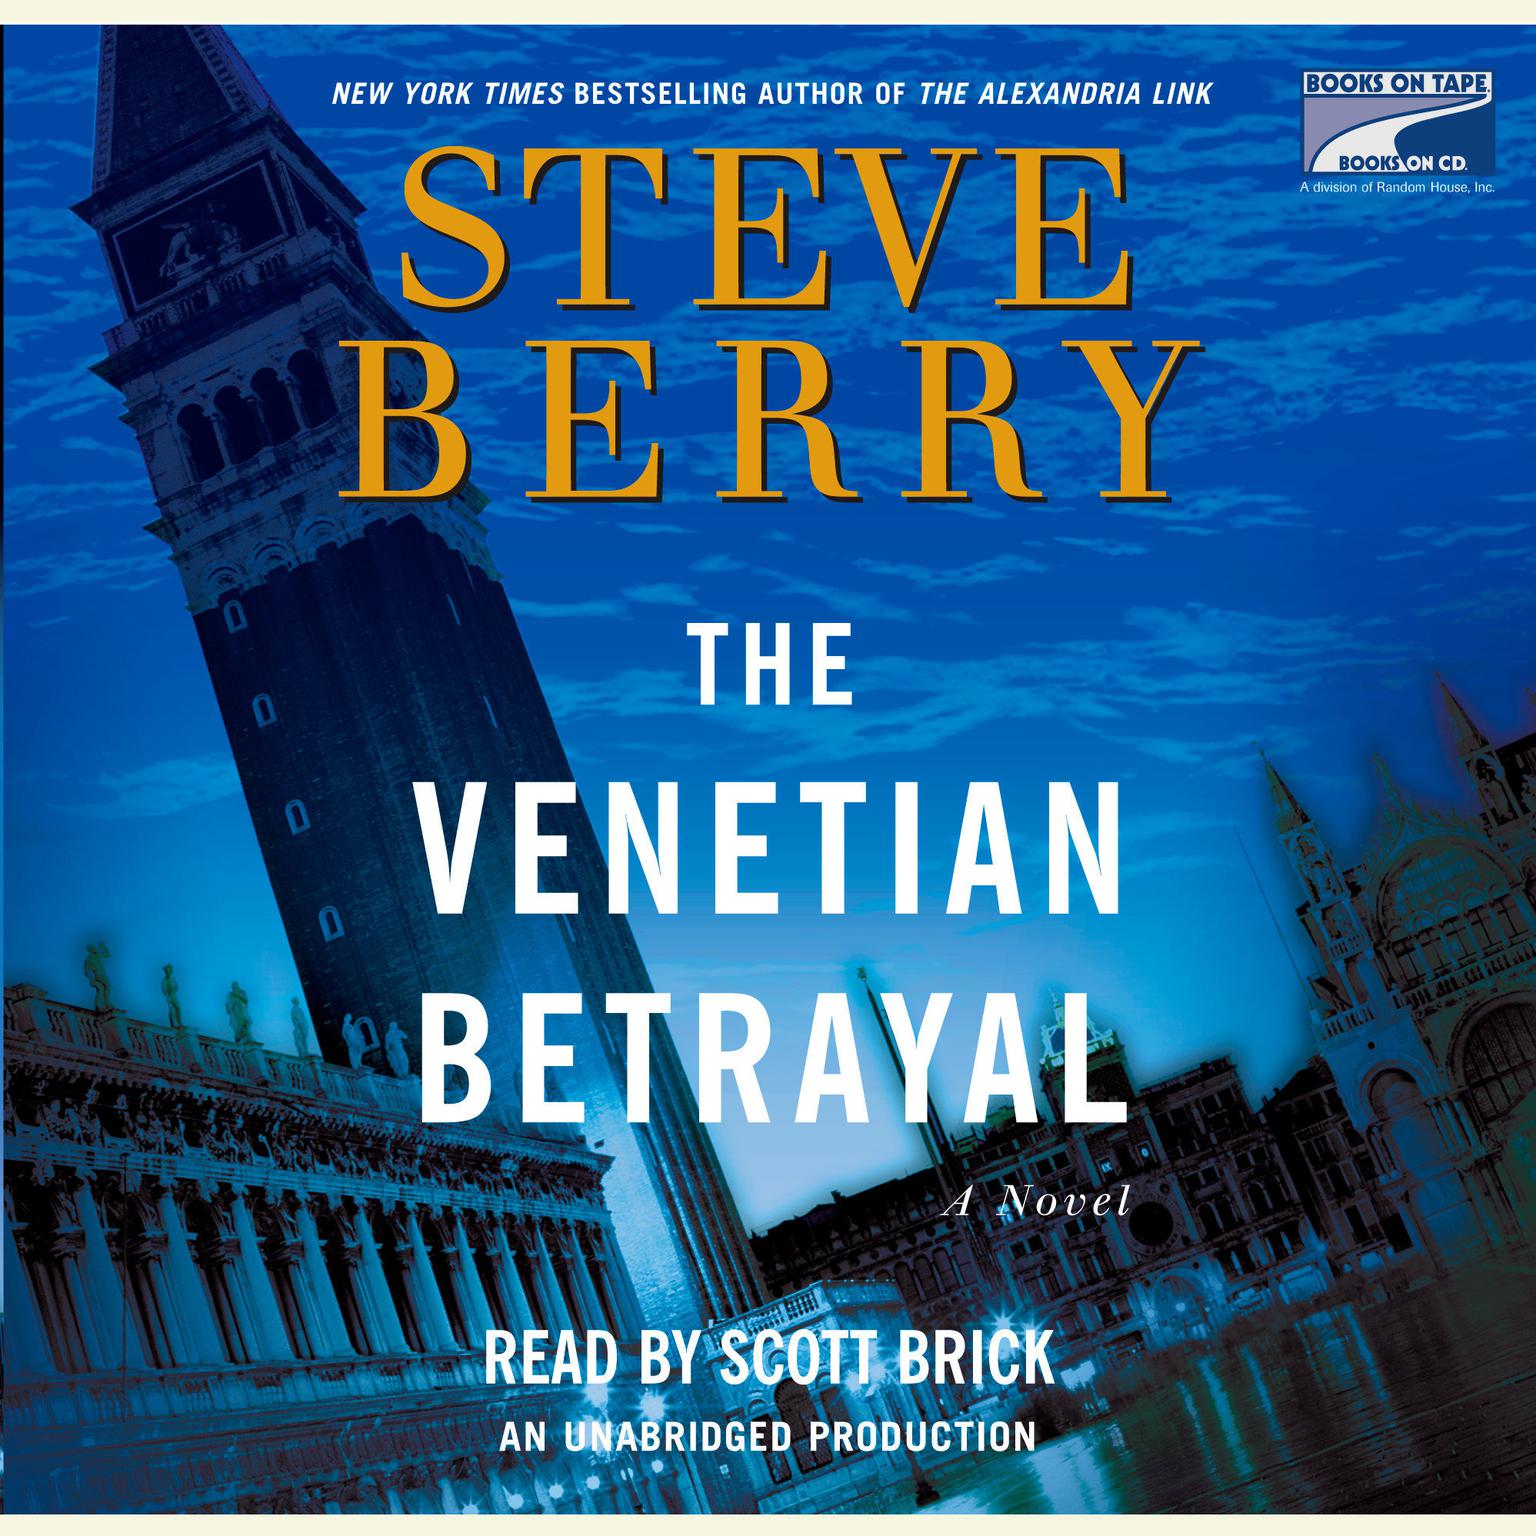 The Venetian Betrayal: A Novel Audiobook, by Steve Berry